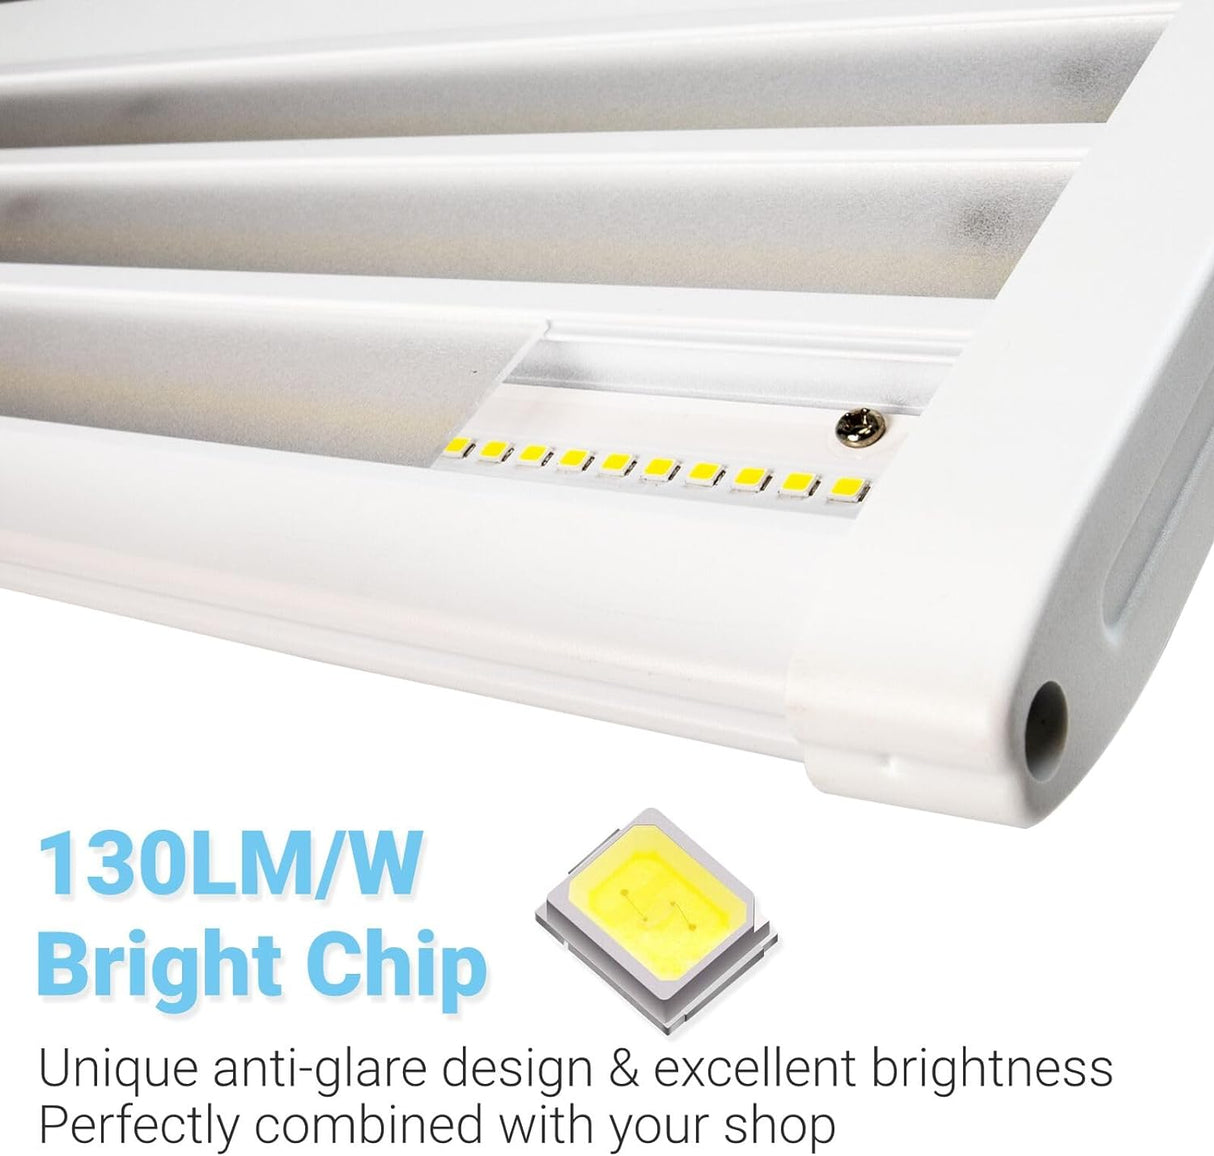 130lm/w bright chip high brightness shop lights